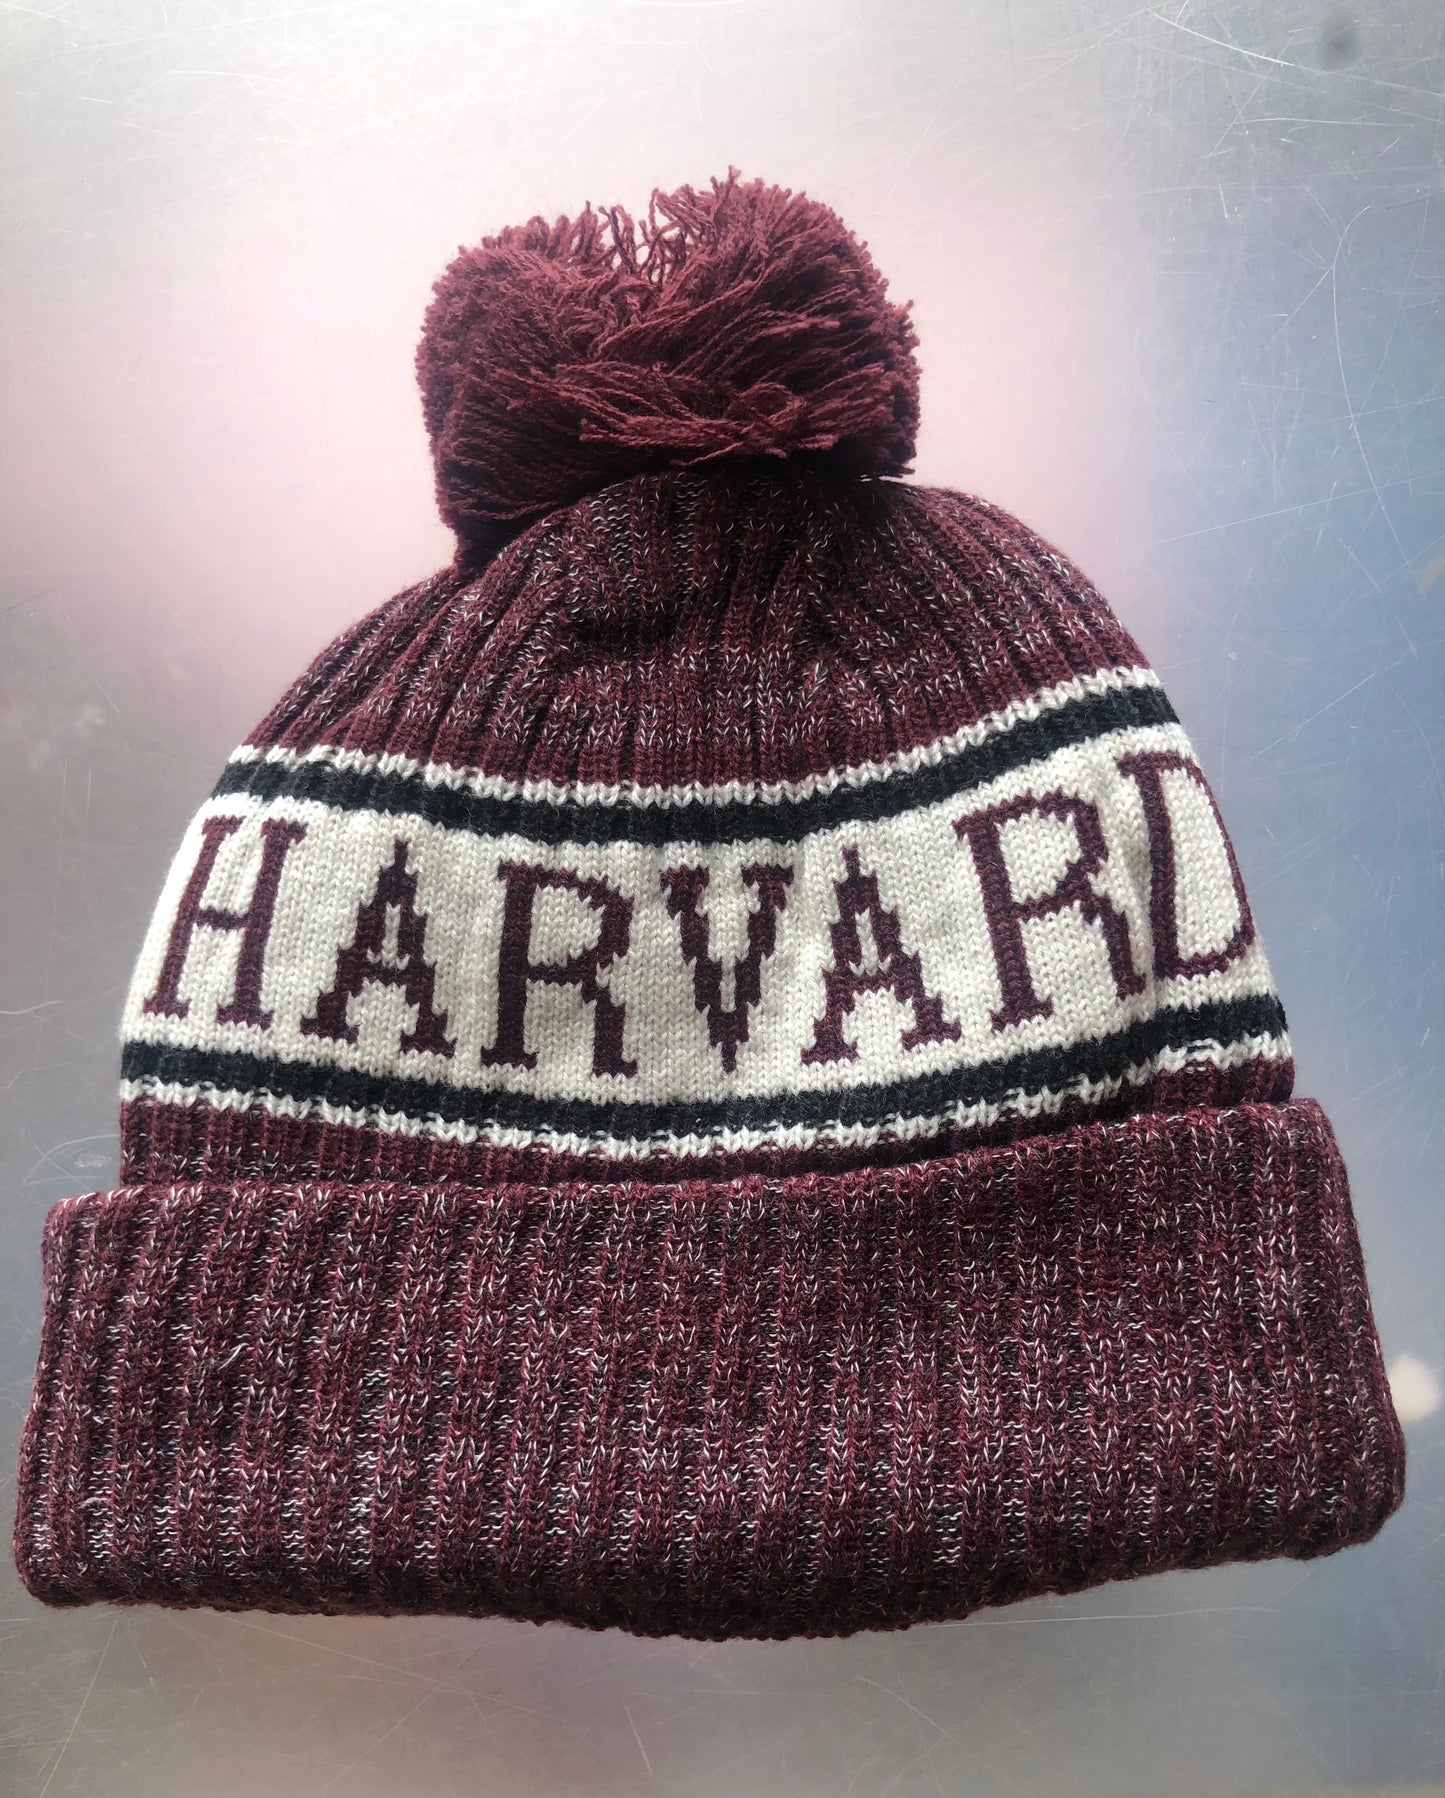 New Era Authentic NCAA Collage Team Harvard Crimson  Cuffed Pomp Men's Knit Hat